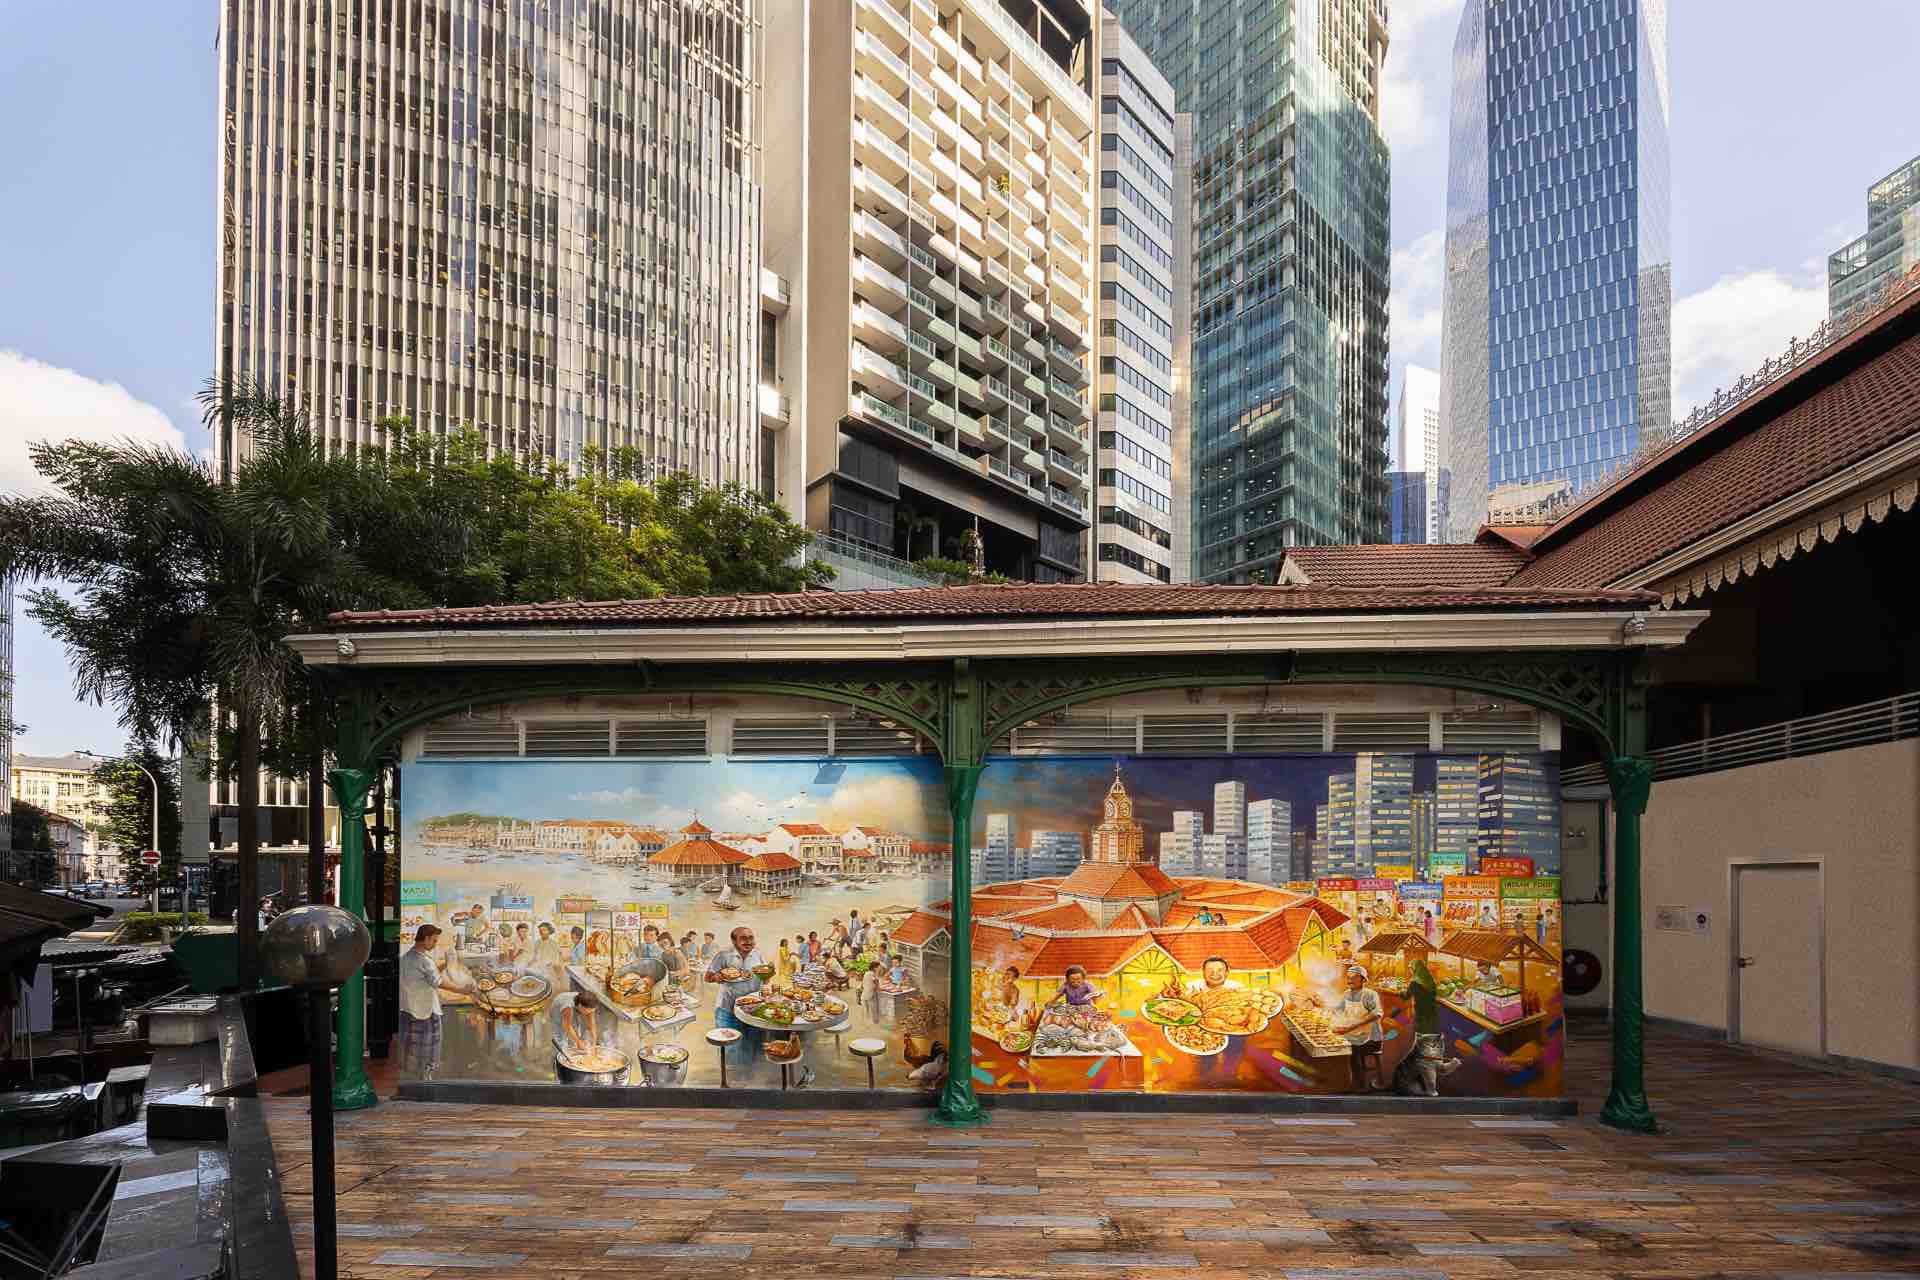 Heritage mural by visual artist Yip Yew Chong at Lau Pa Sat